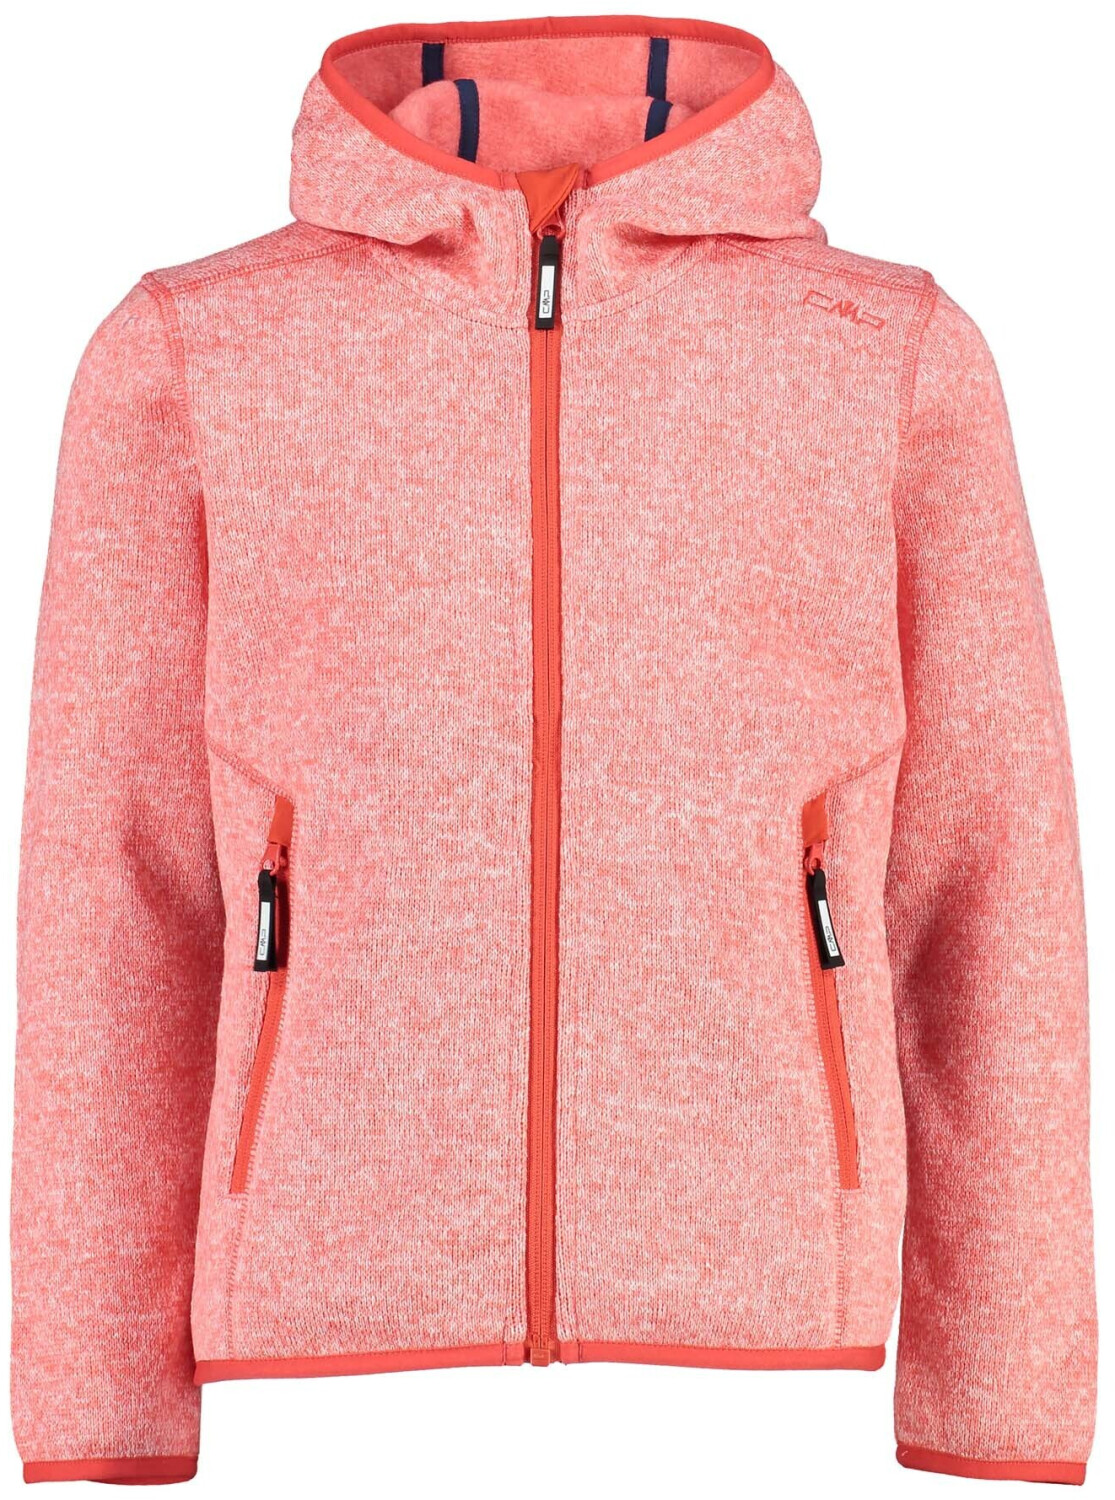 CMP Girl Knit-Tech (3H19825) € Fleece-Jacket corallo/red 22,58 kiss ab | bei Preisvergleich